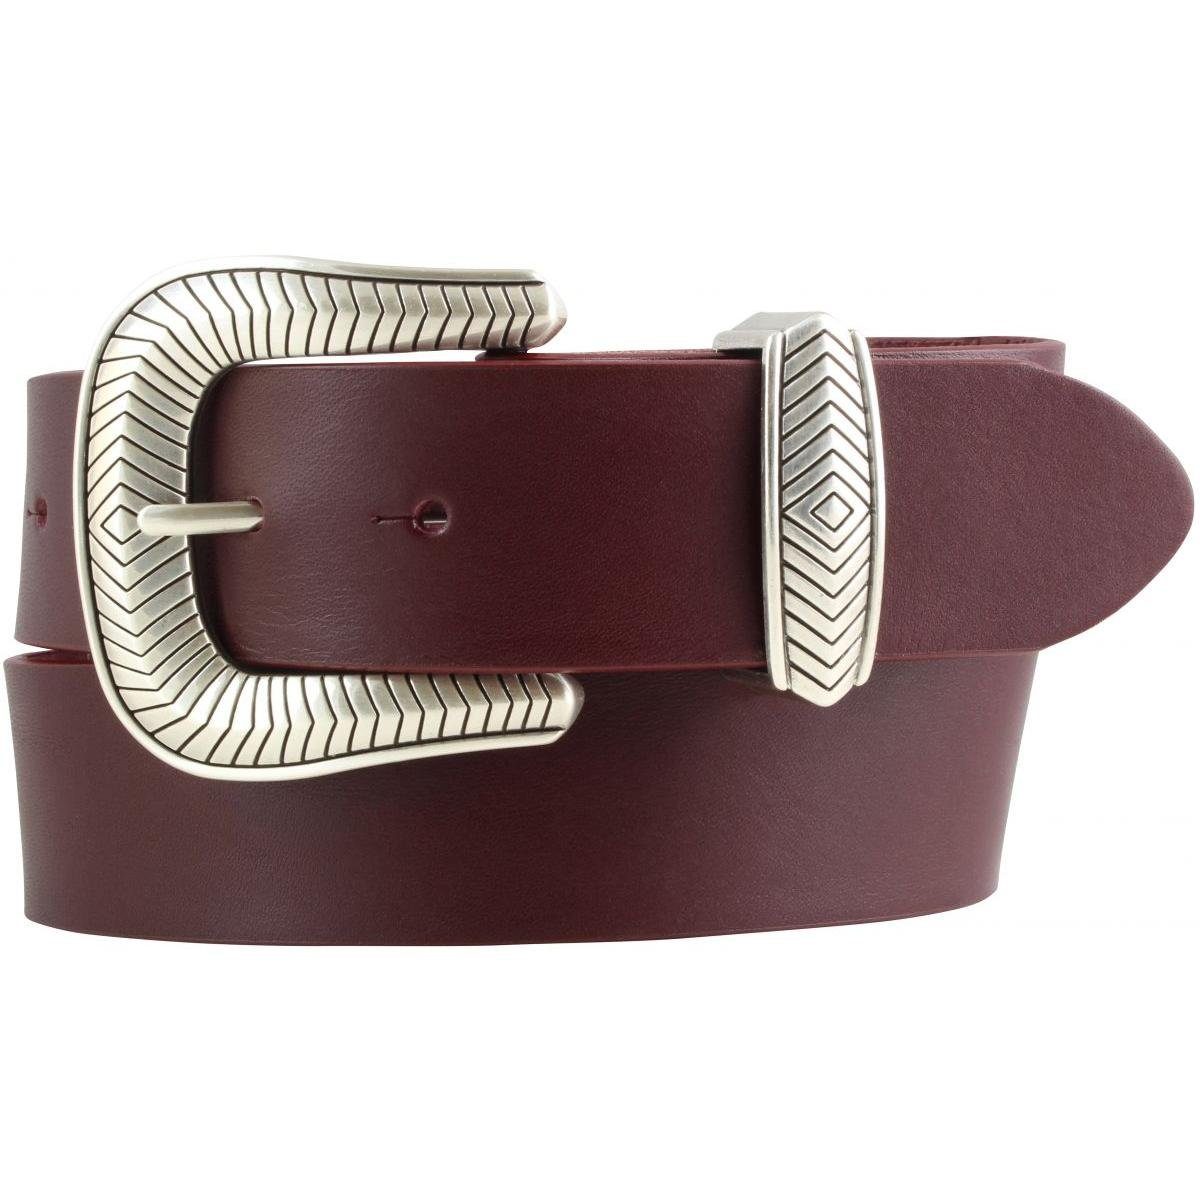 BELTINGER Ledergürtel Designer-Gürtel aus Vollrindleder mit Metall-Schlaufe 4 cm - Jeans-Gür Bordeaux, Silber